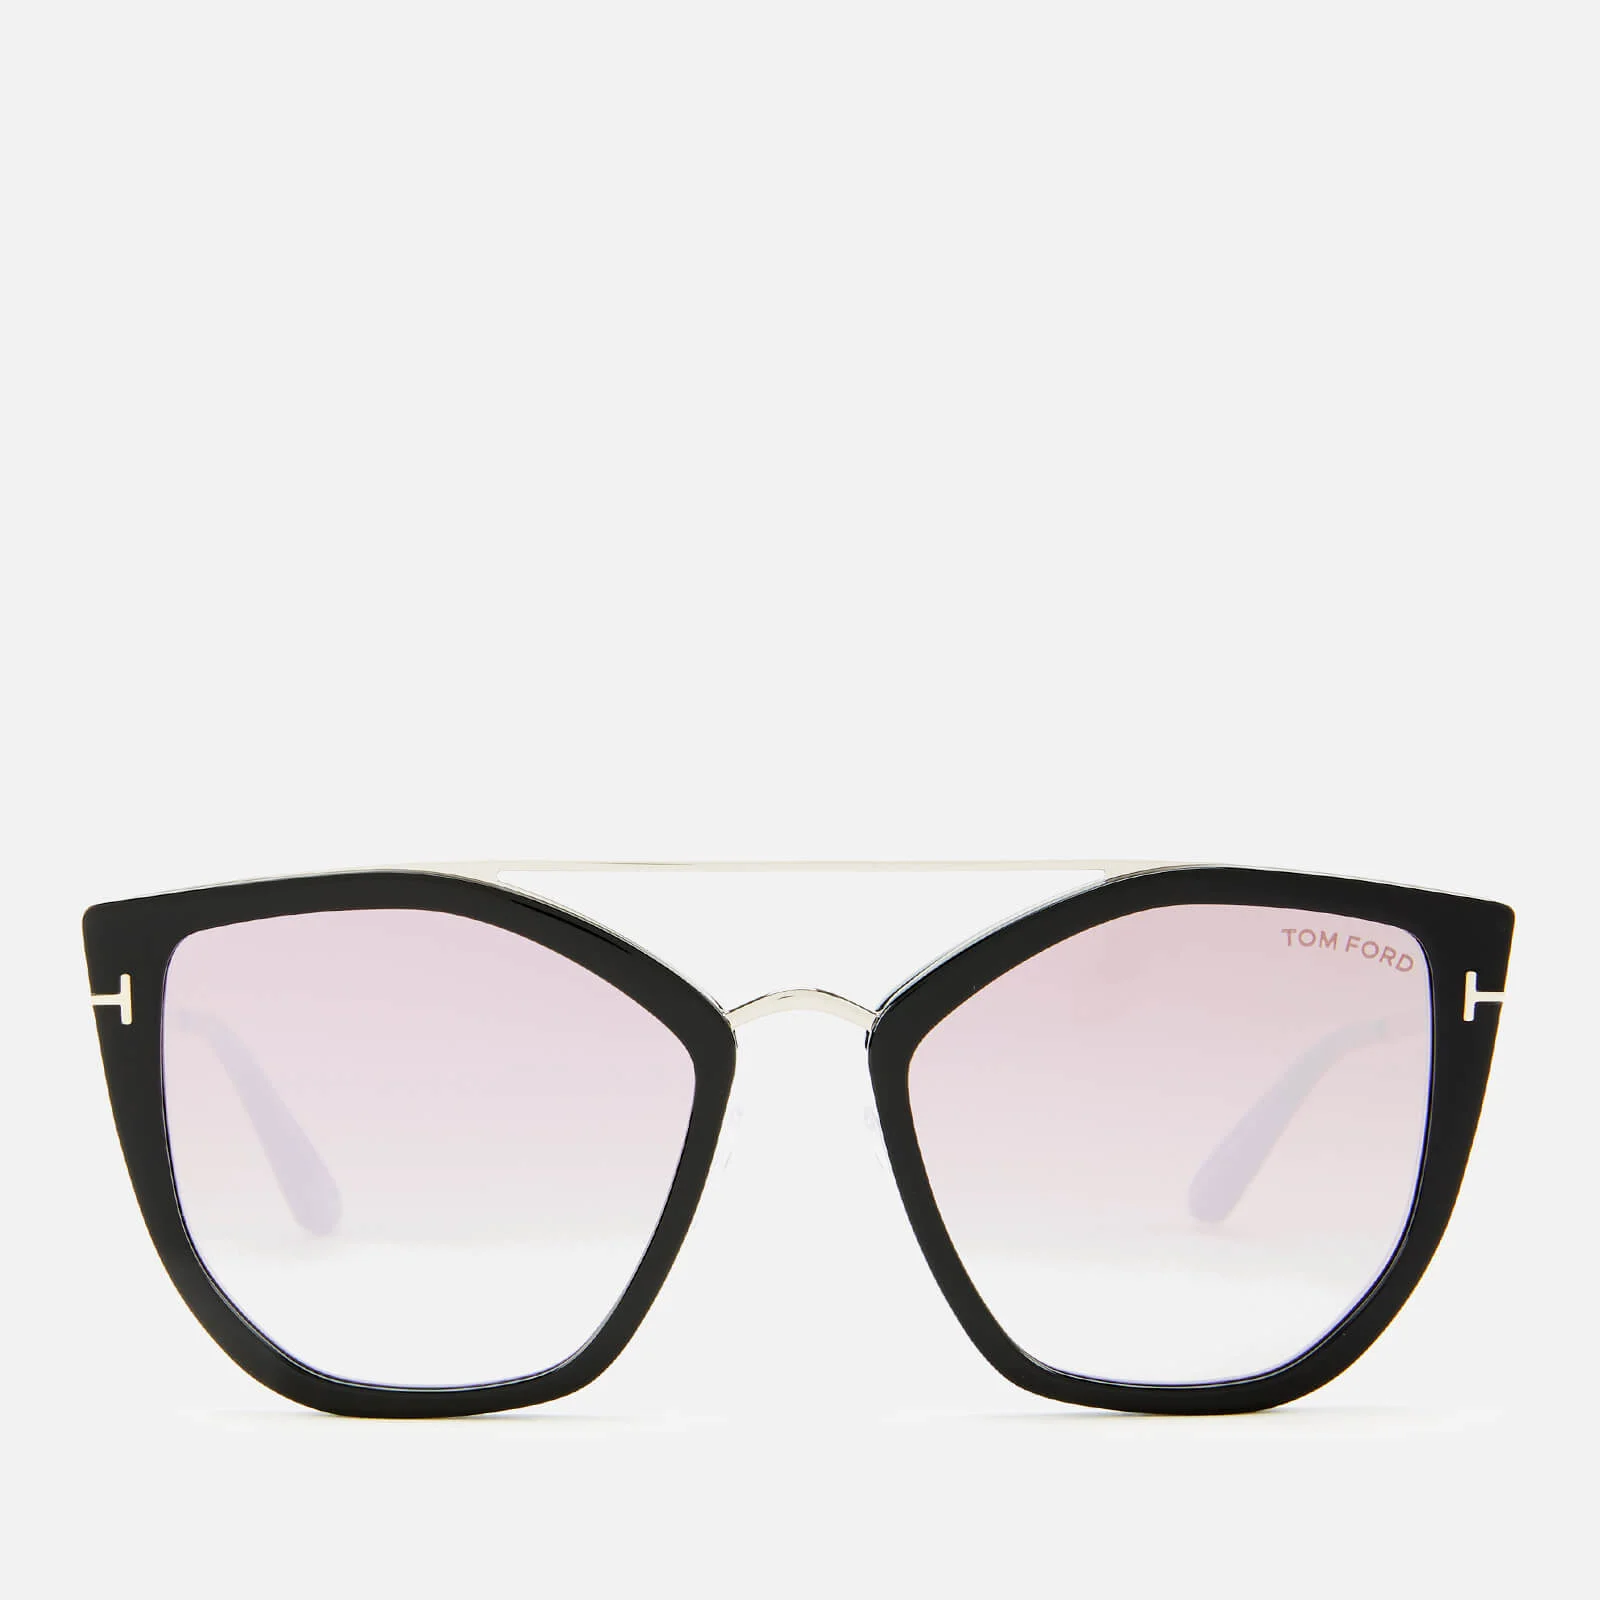 Tom Ford Women's Dahlia Sunglasses - Shiny Black/Gradient or Mirror Violet Image 1